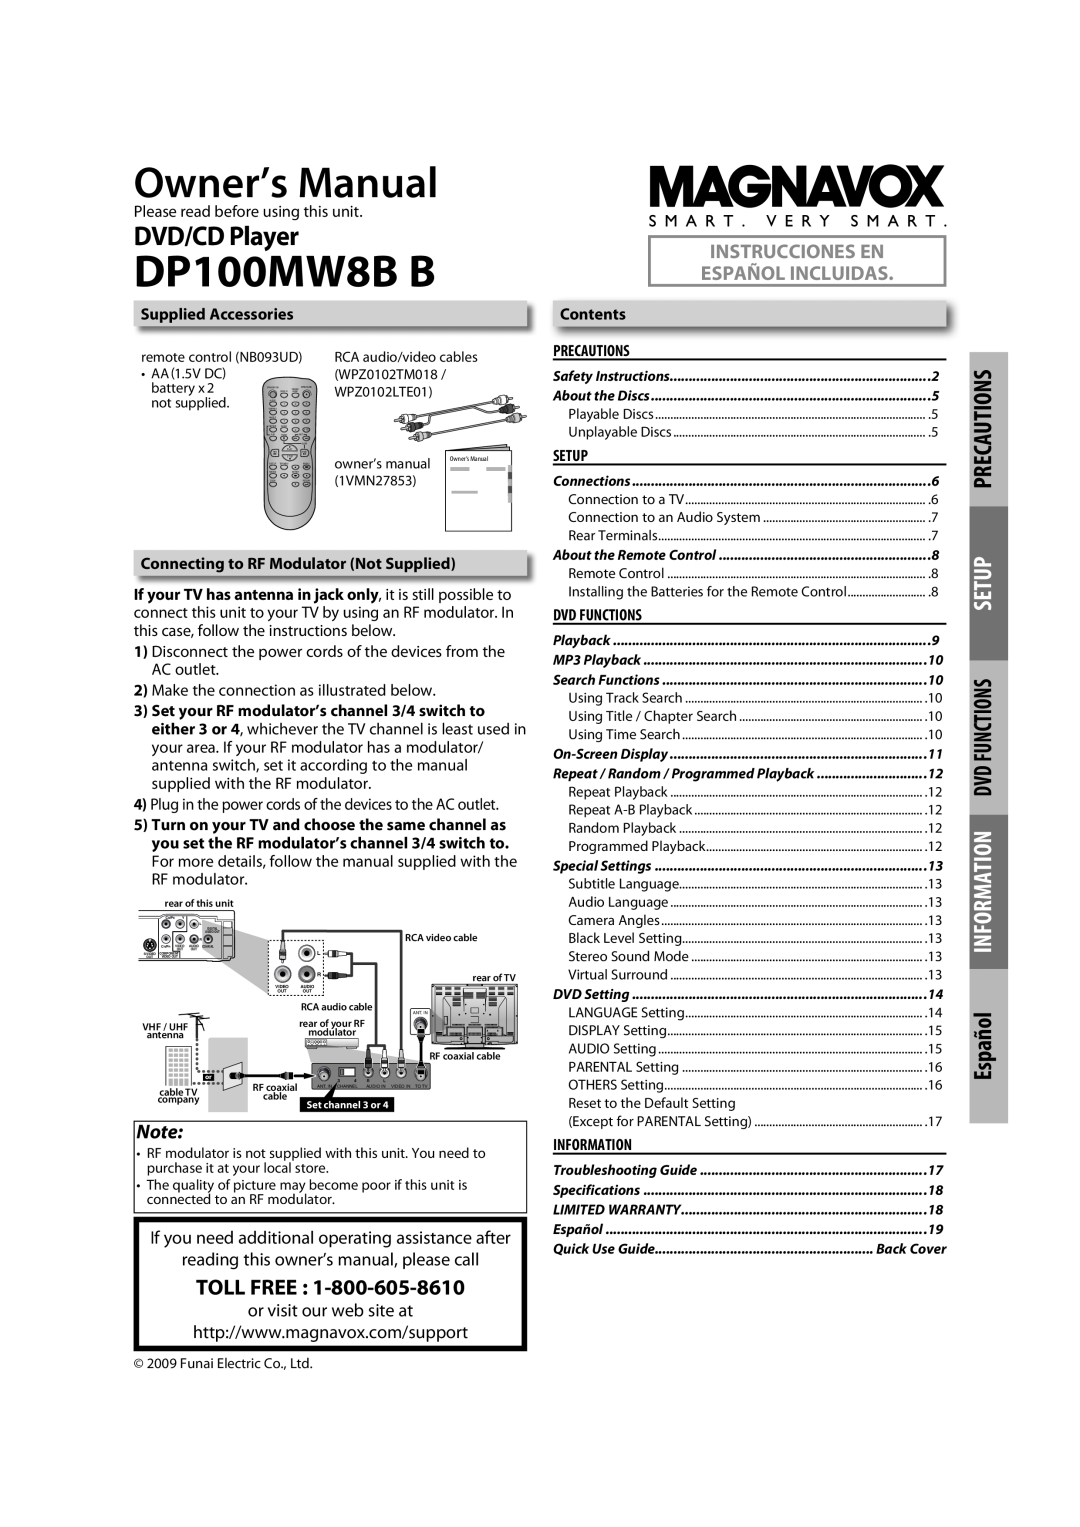 Magnavox DP100MW8B B owner manual Owner’s Manual, Precautions, Toll Free, reading this owner’s manual, please call, Setup 